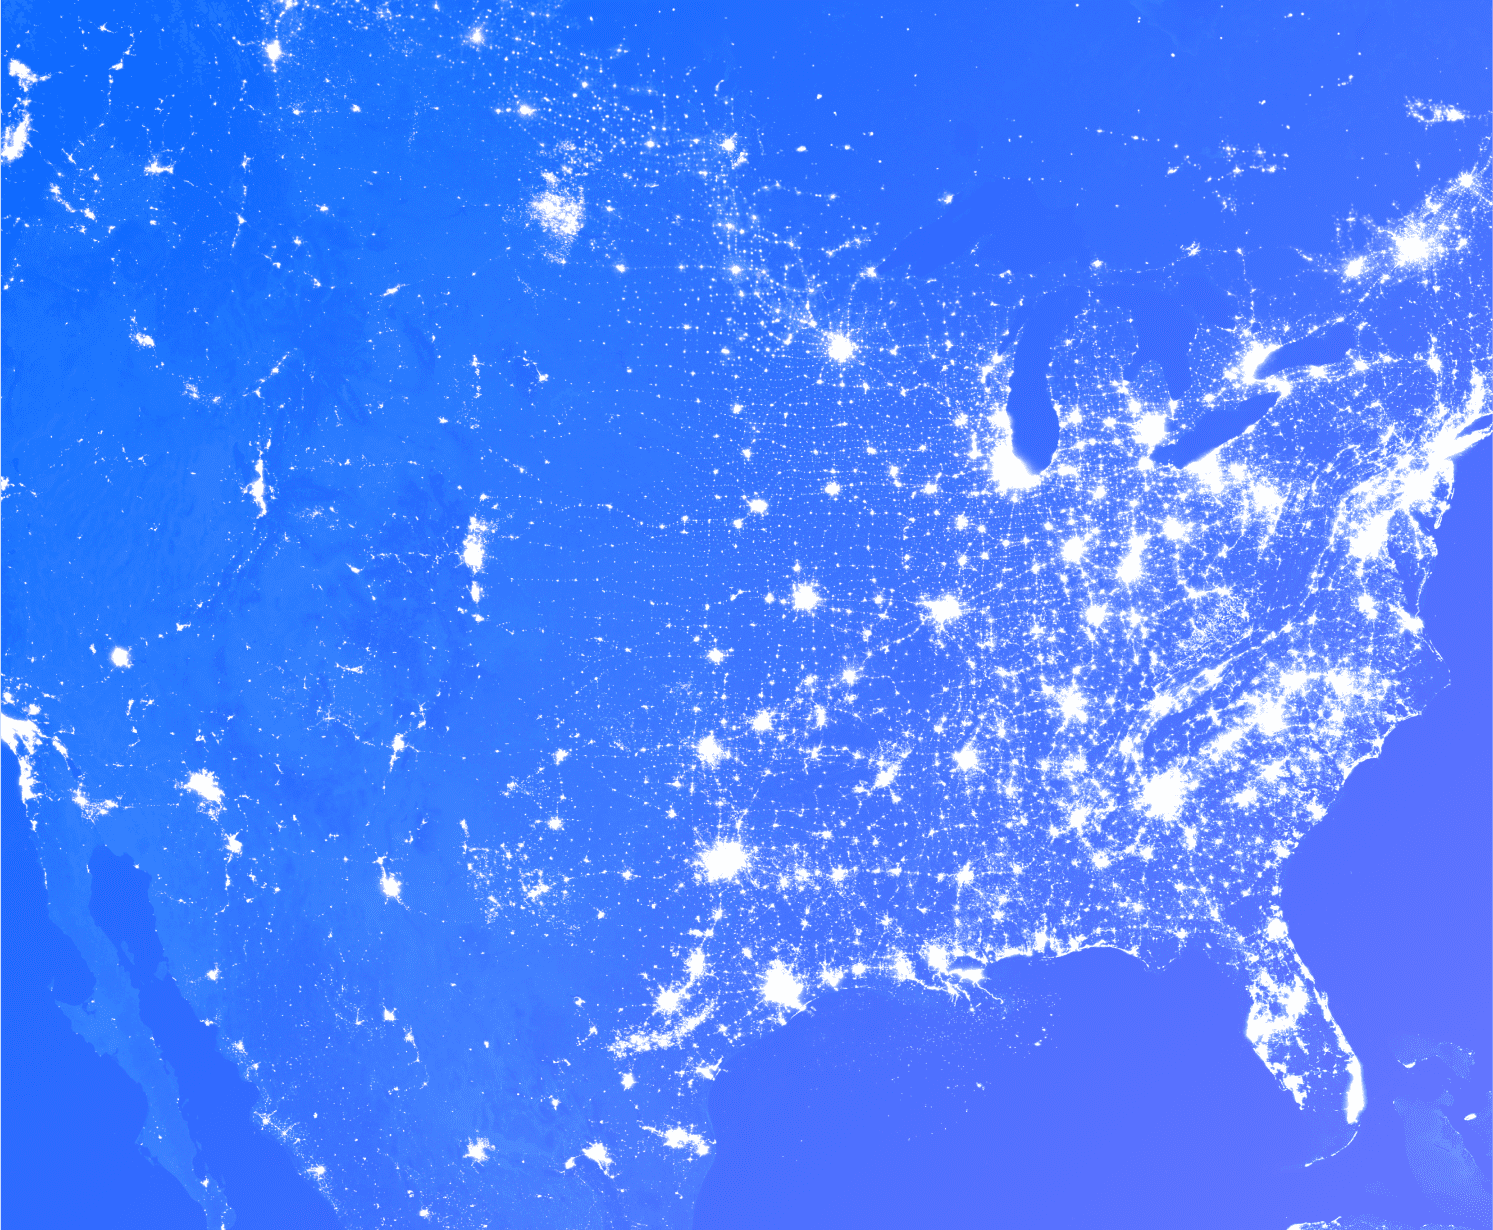 USA with lights illuminated